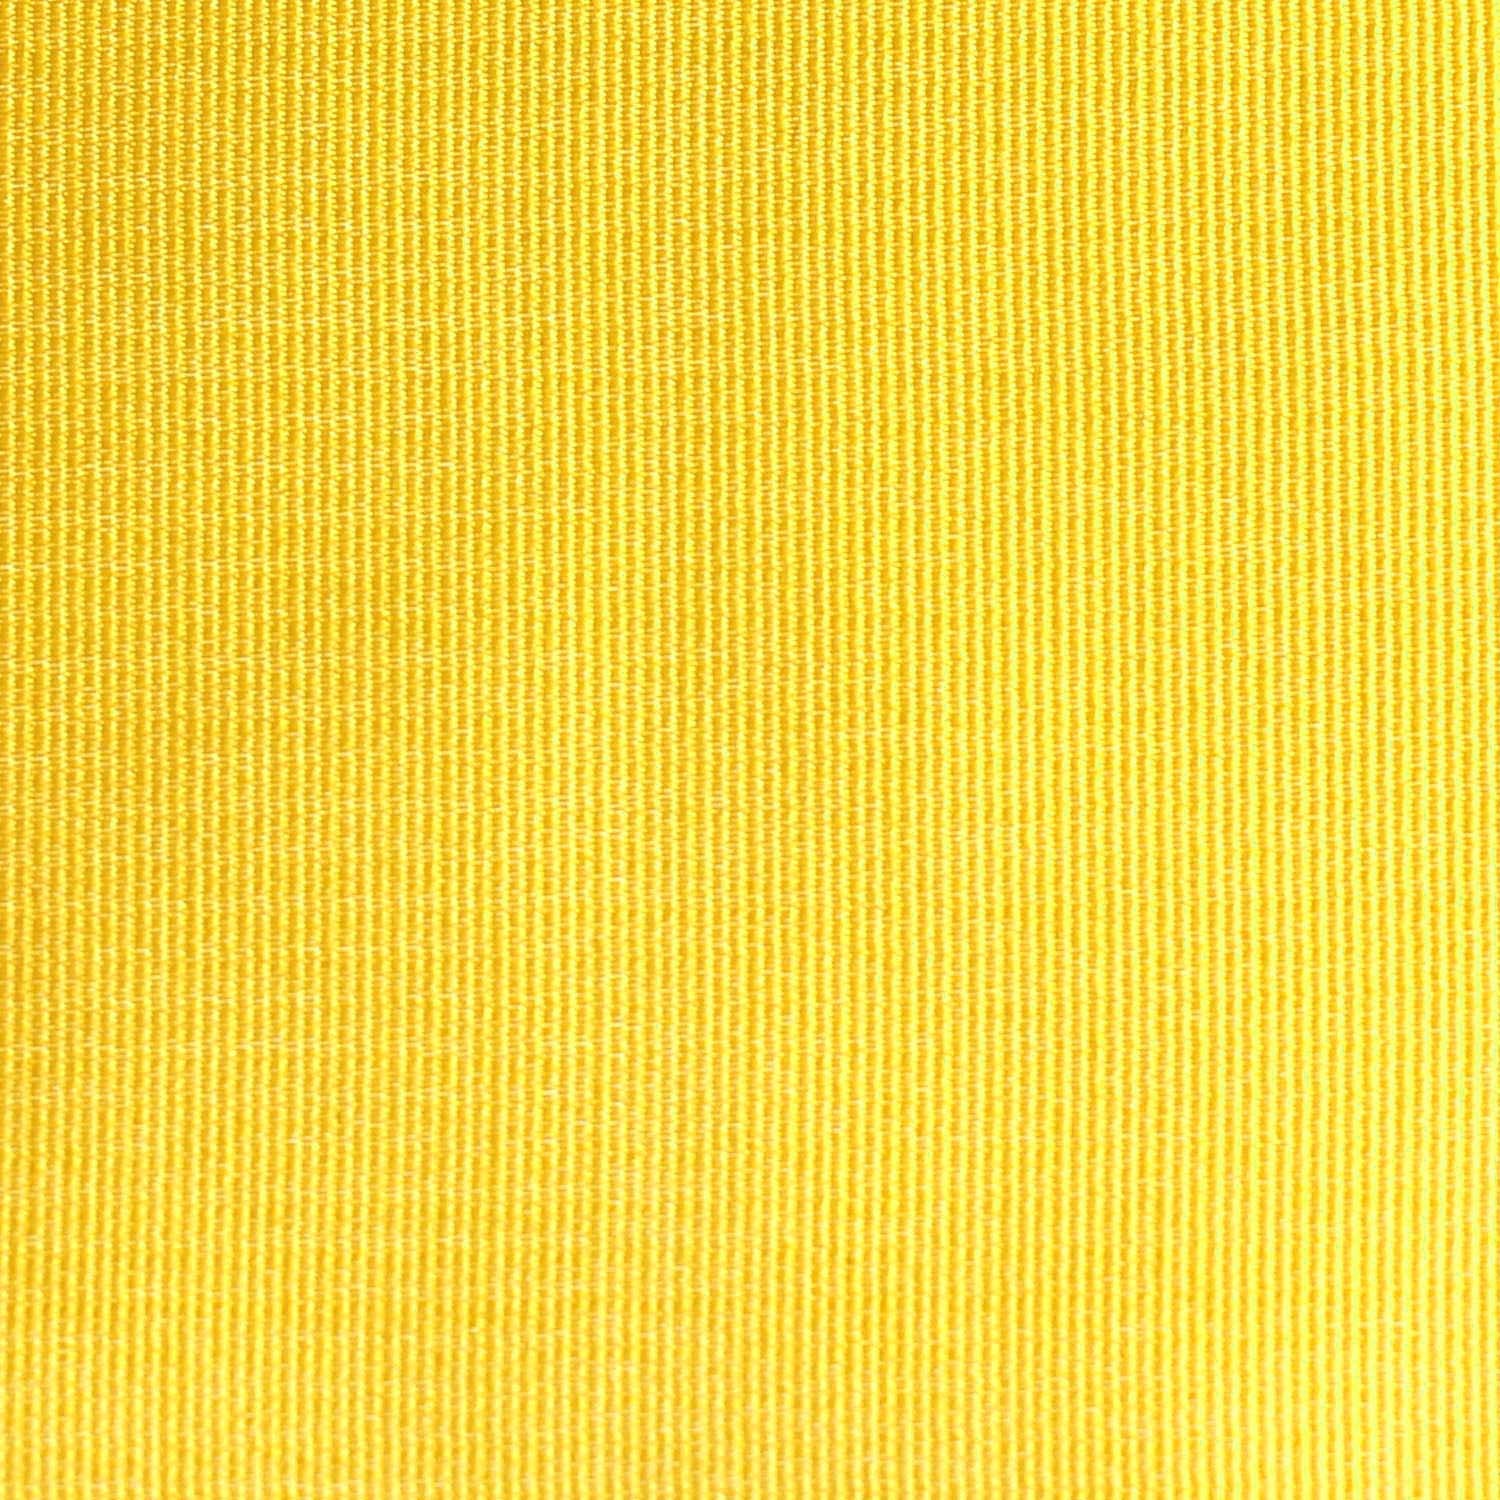 Banana Yellow Fabric Bow Tie X079Banana Yellow Fabric Bow Tie X079